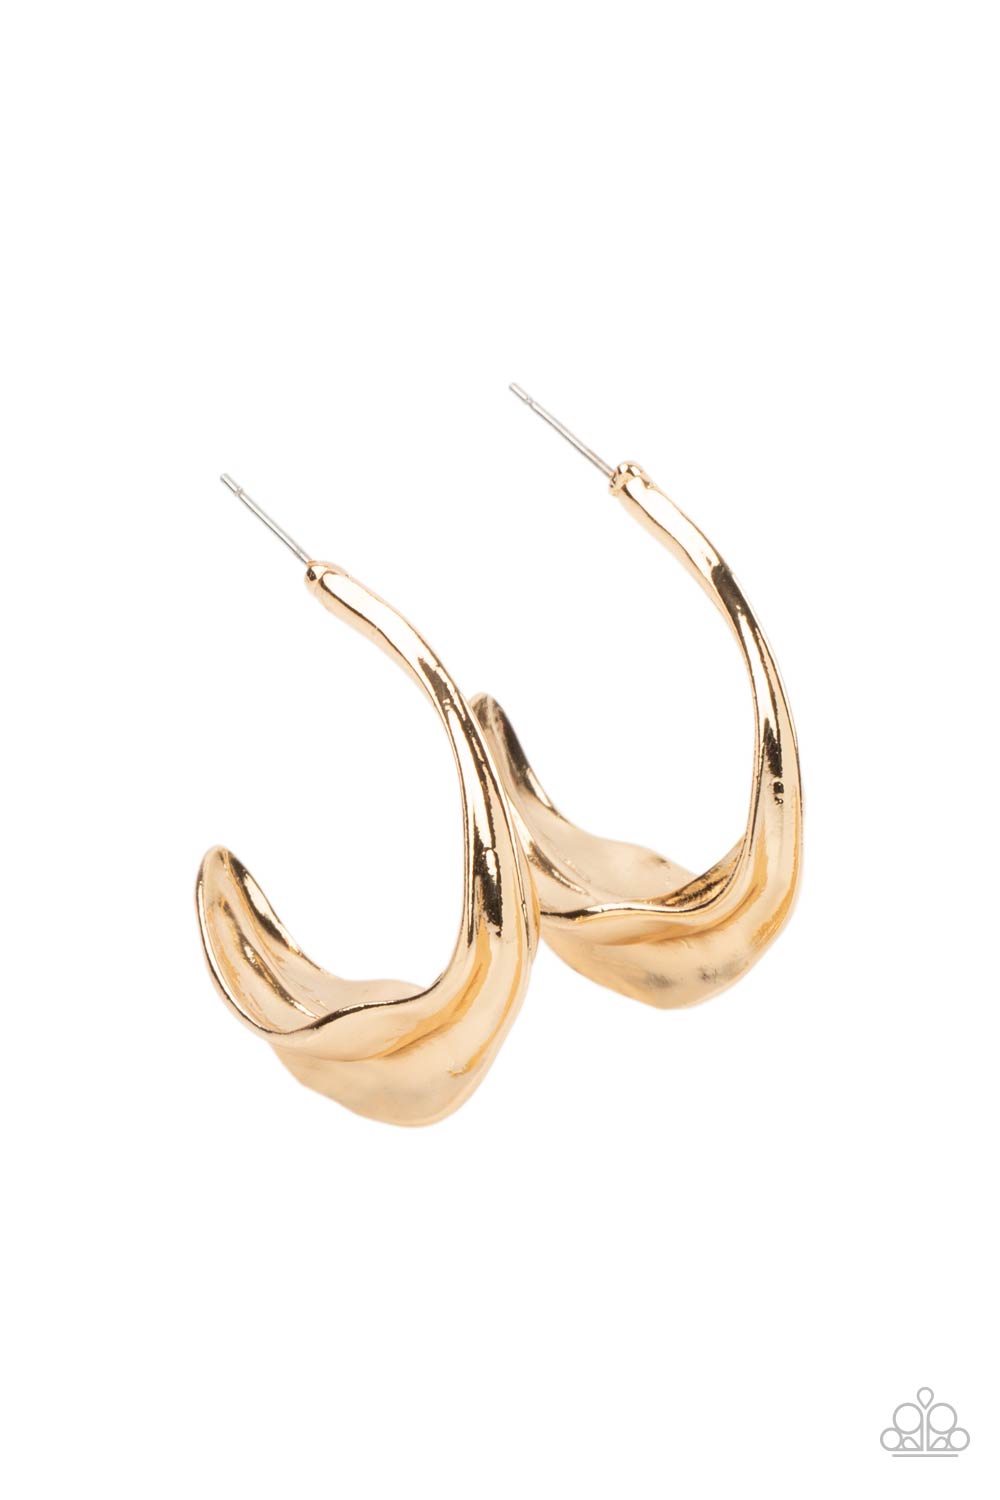 Modern Meltdown - Gold Hoop Earrings - Princess Glam Shop